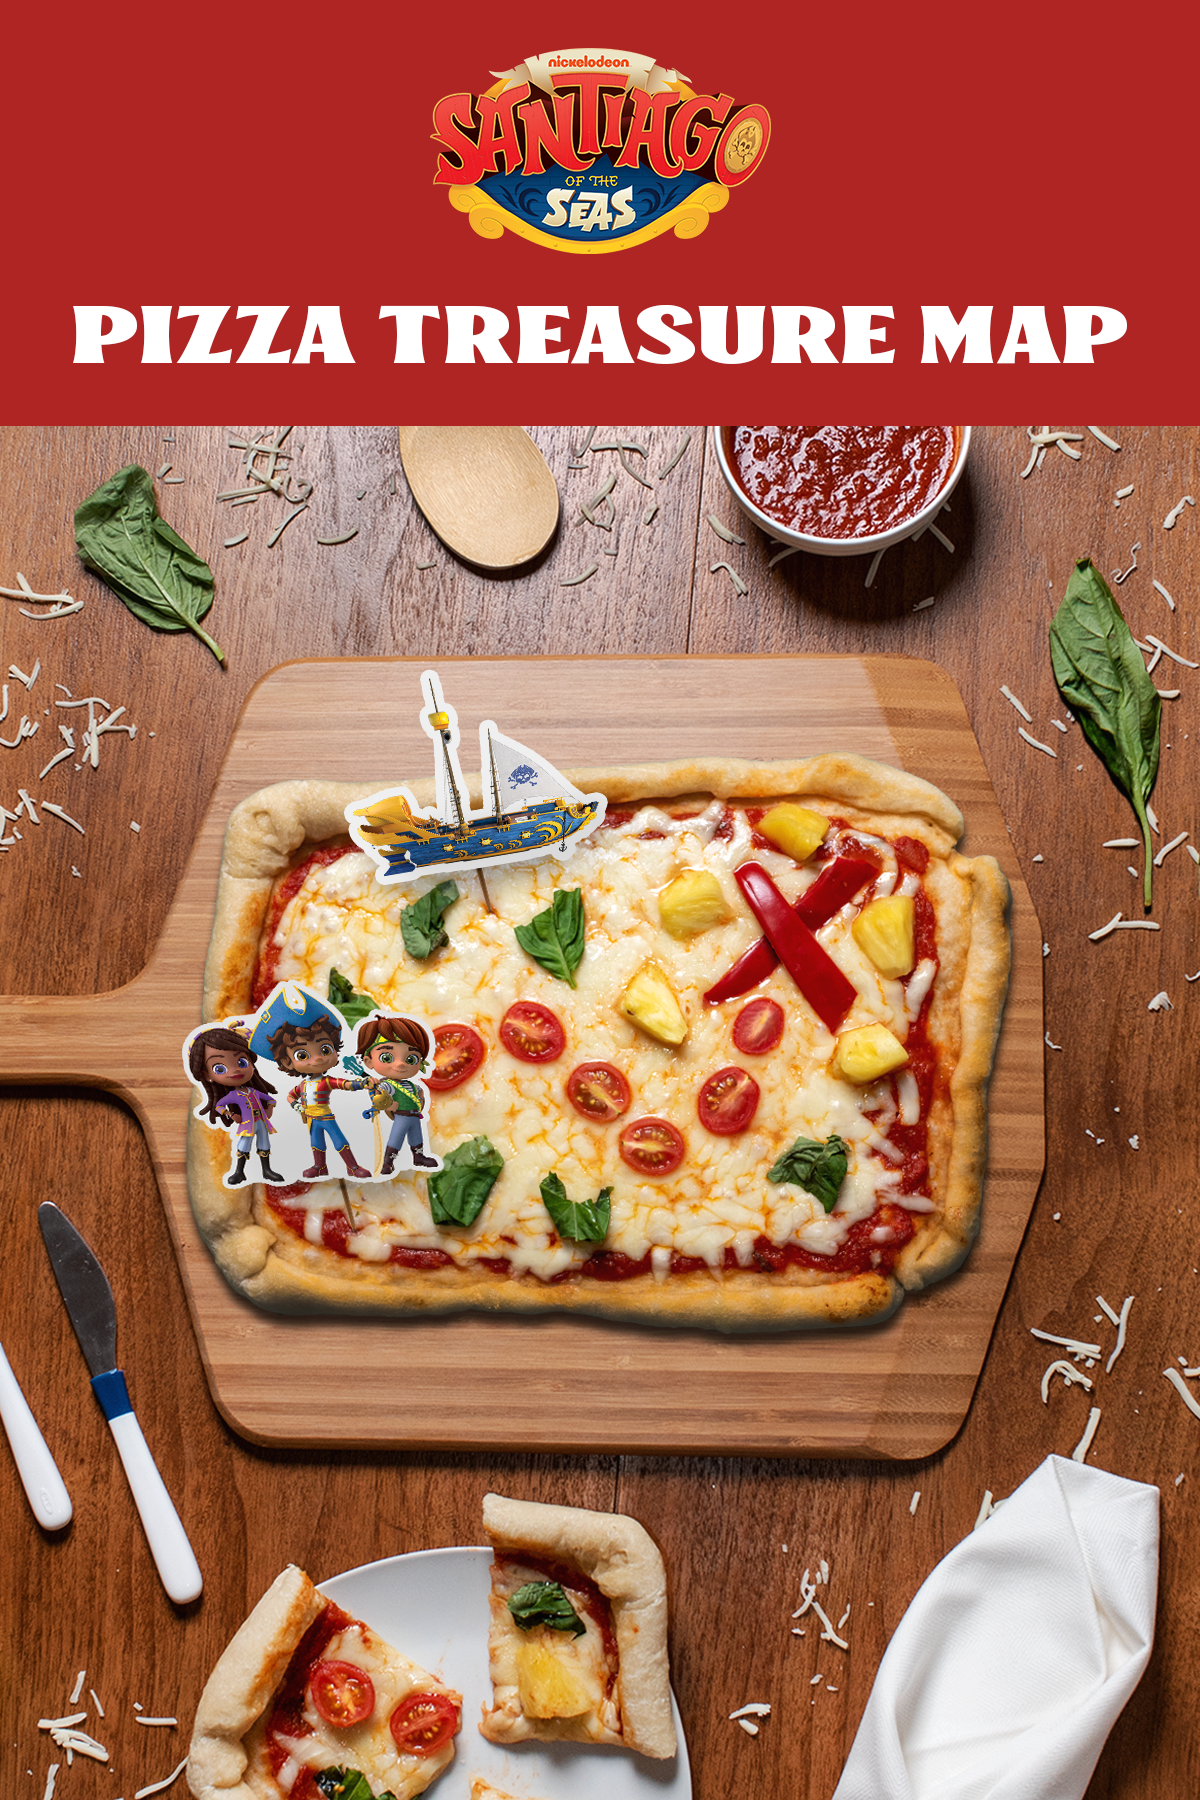 Santiago of the Seas Pizza Treasure Map 2x3